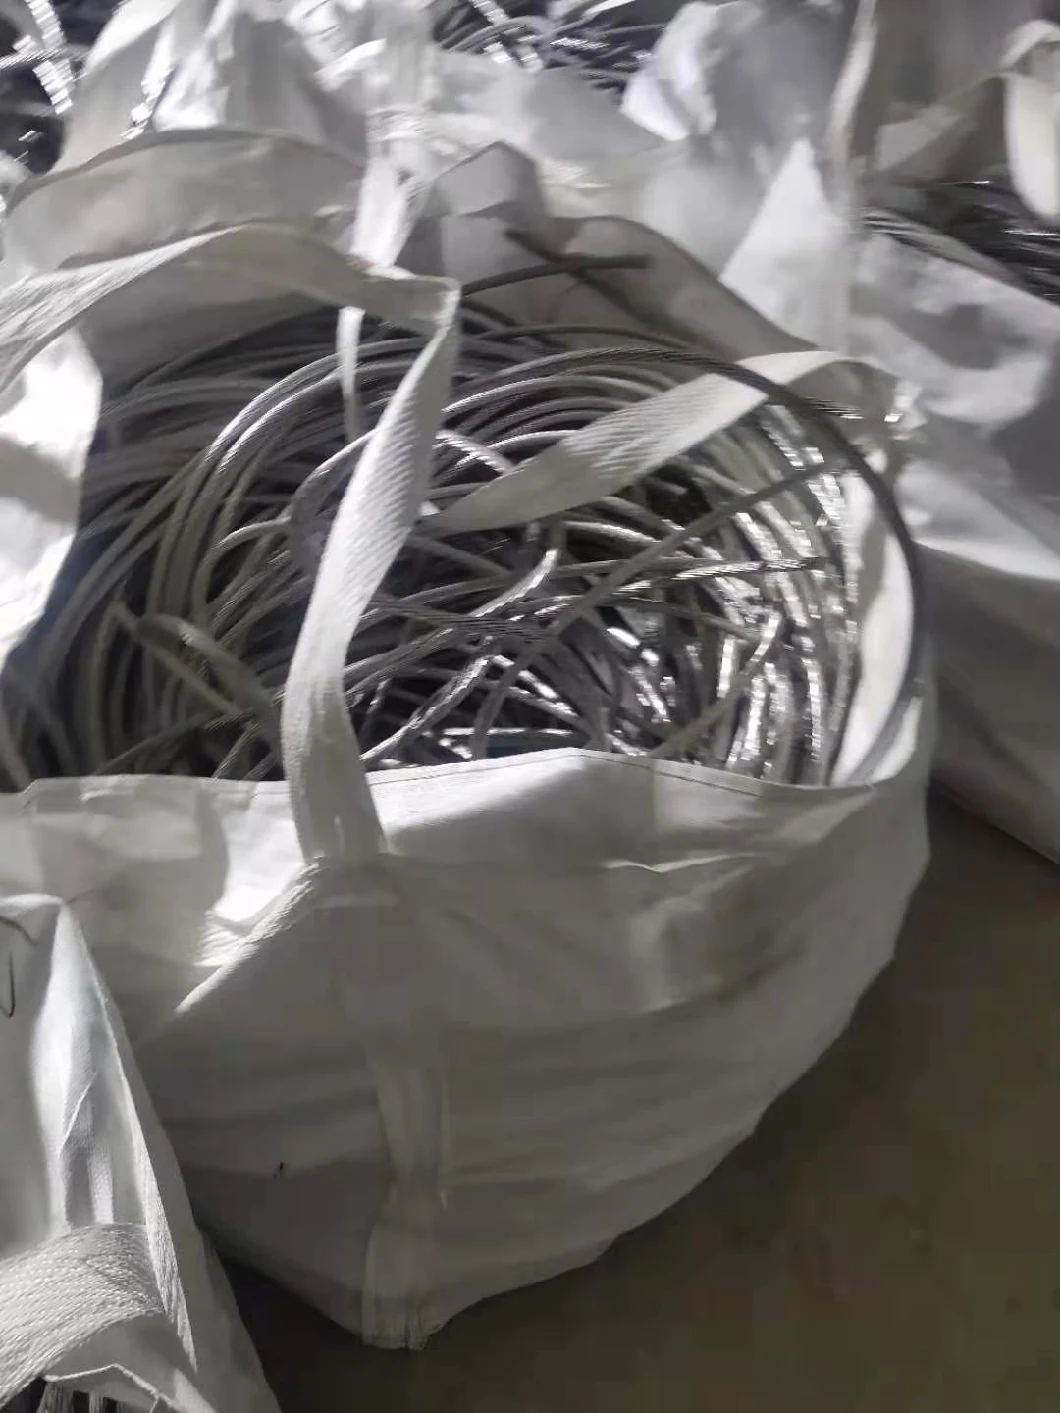 Pure Aluminium Scrap Wire on Sale Made in China